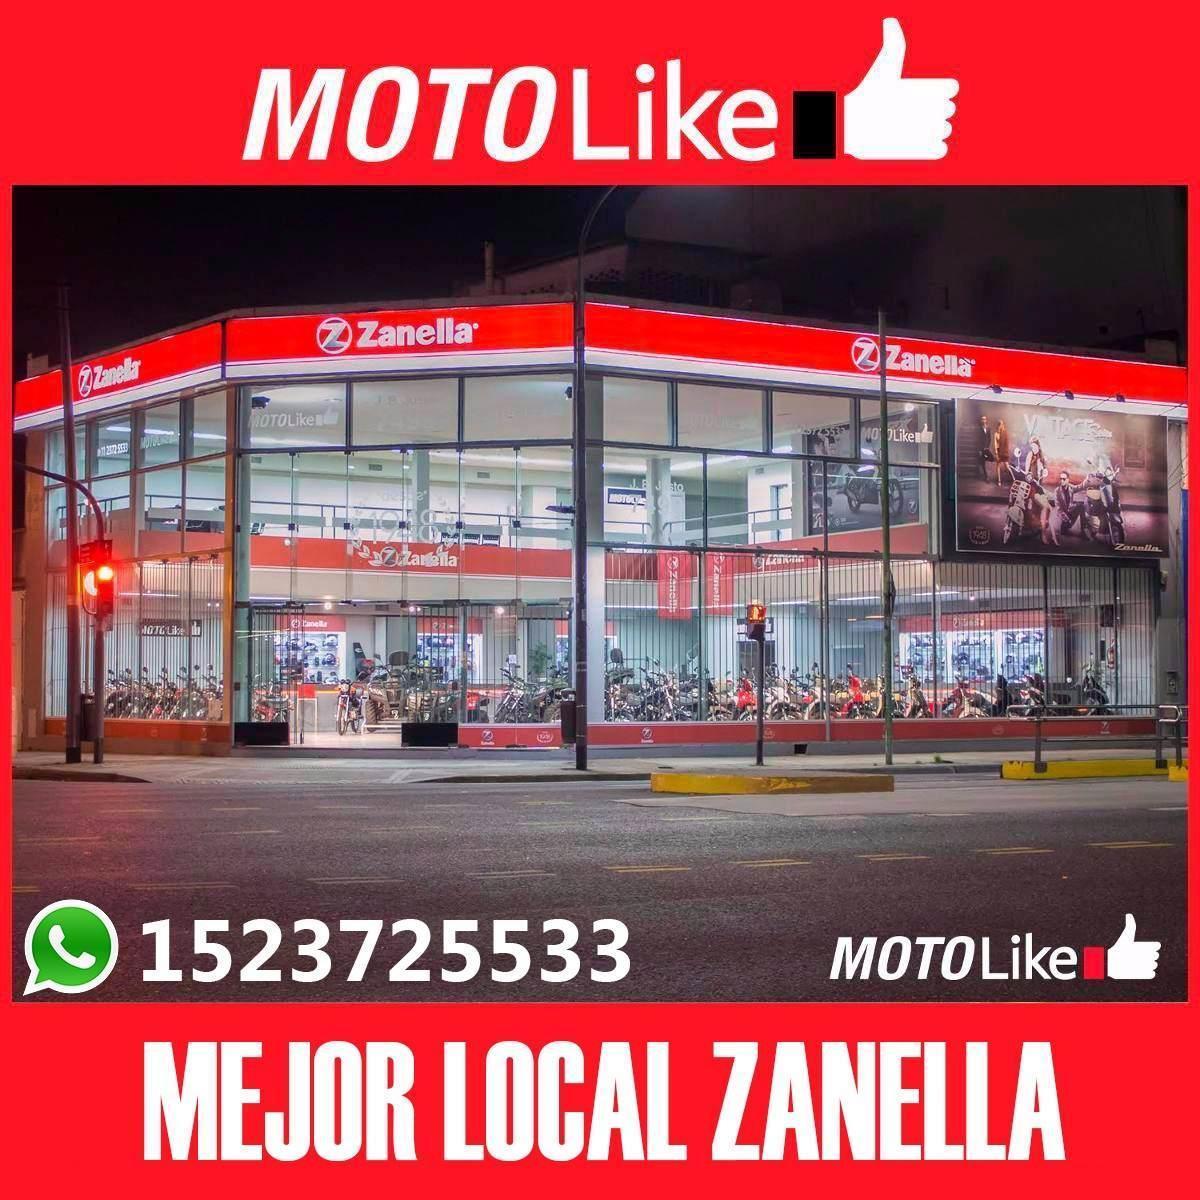 Zanella Zr 250 Gta 0km Moto Like Oferta